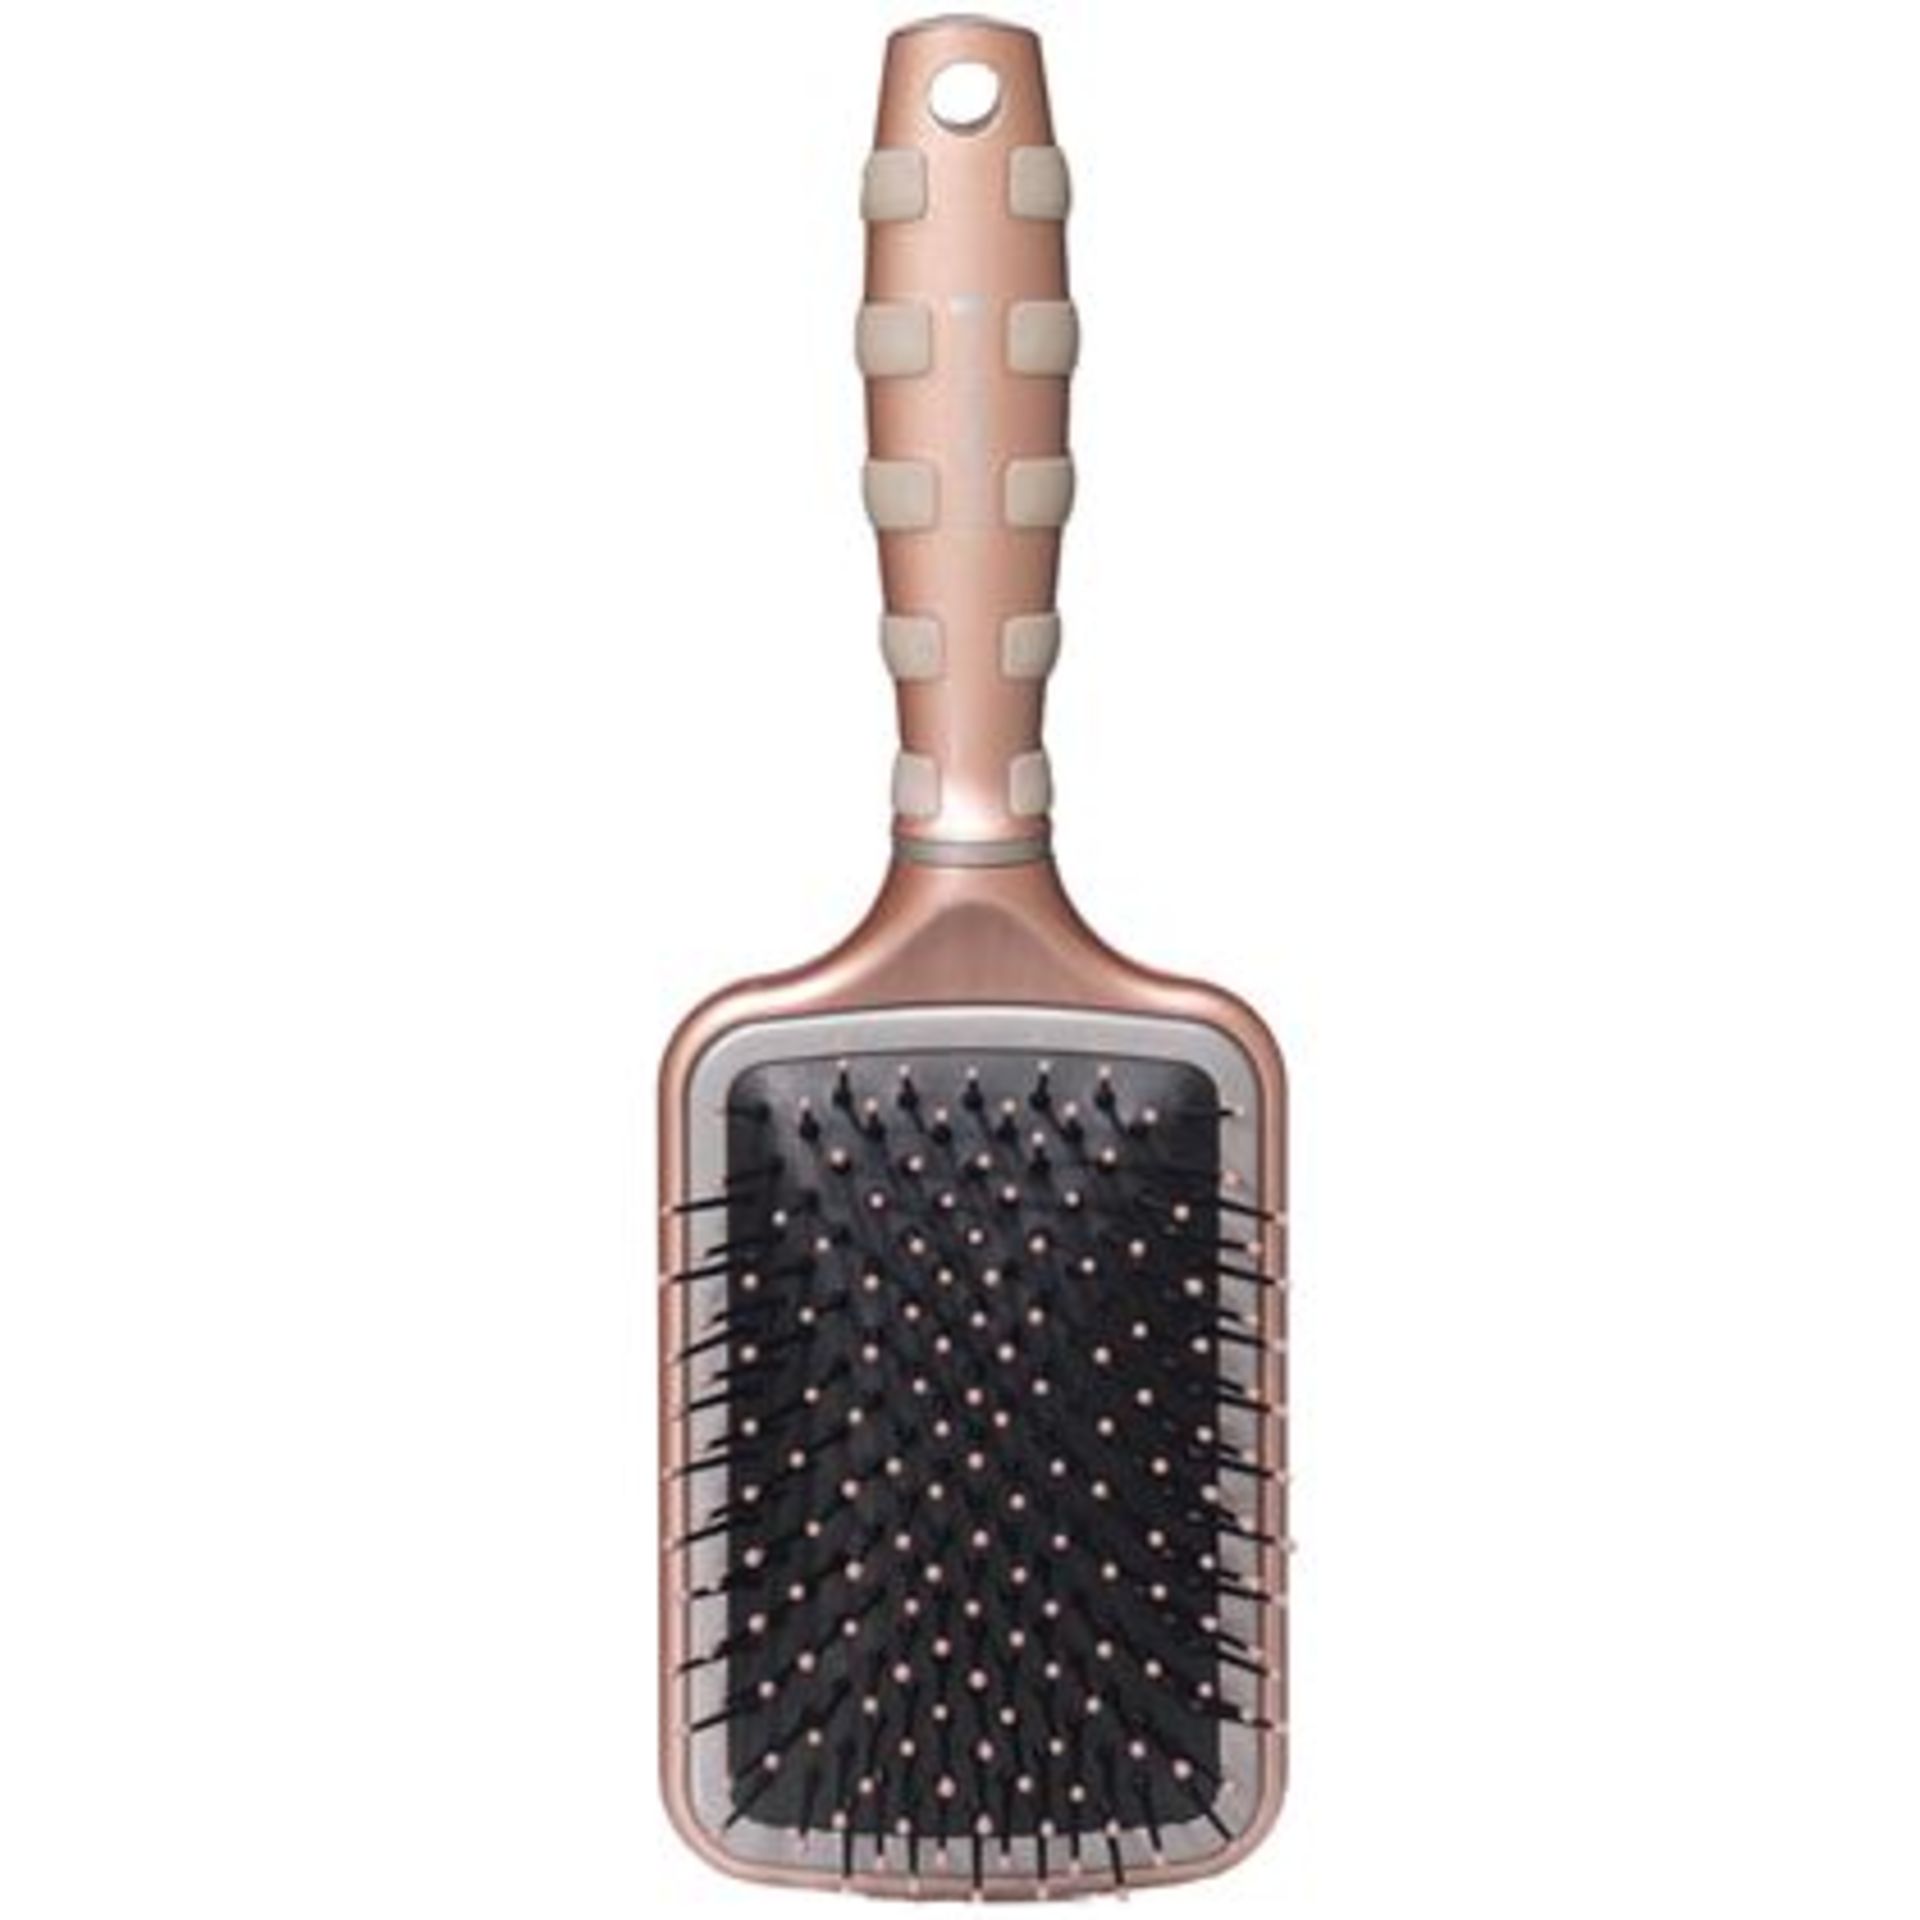 V Brand New Remington Keratin Therapy Paddle Hair Brush For Sleek Straight Styles With Keratin